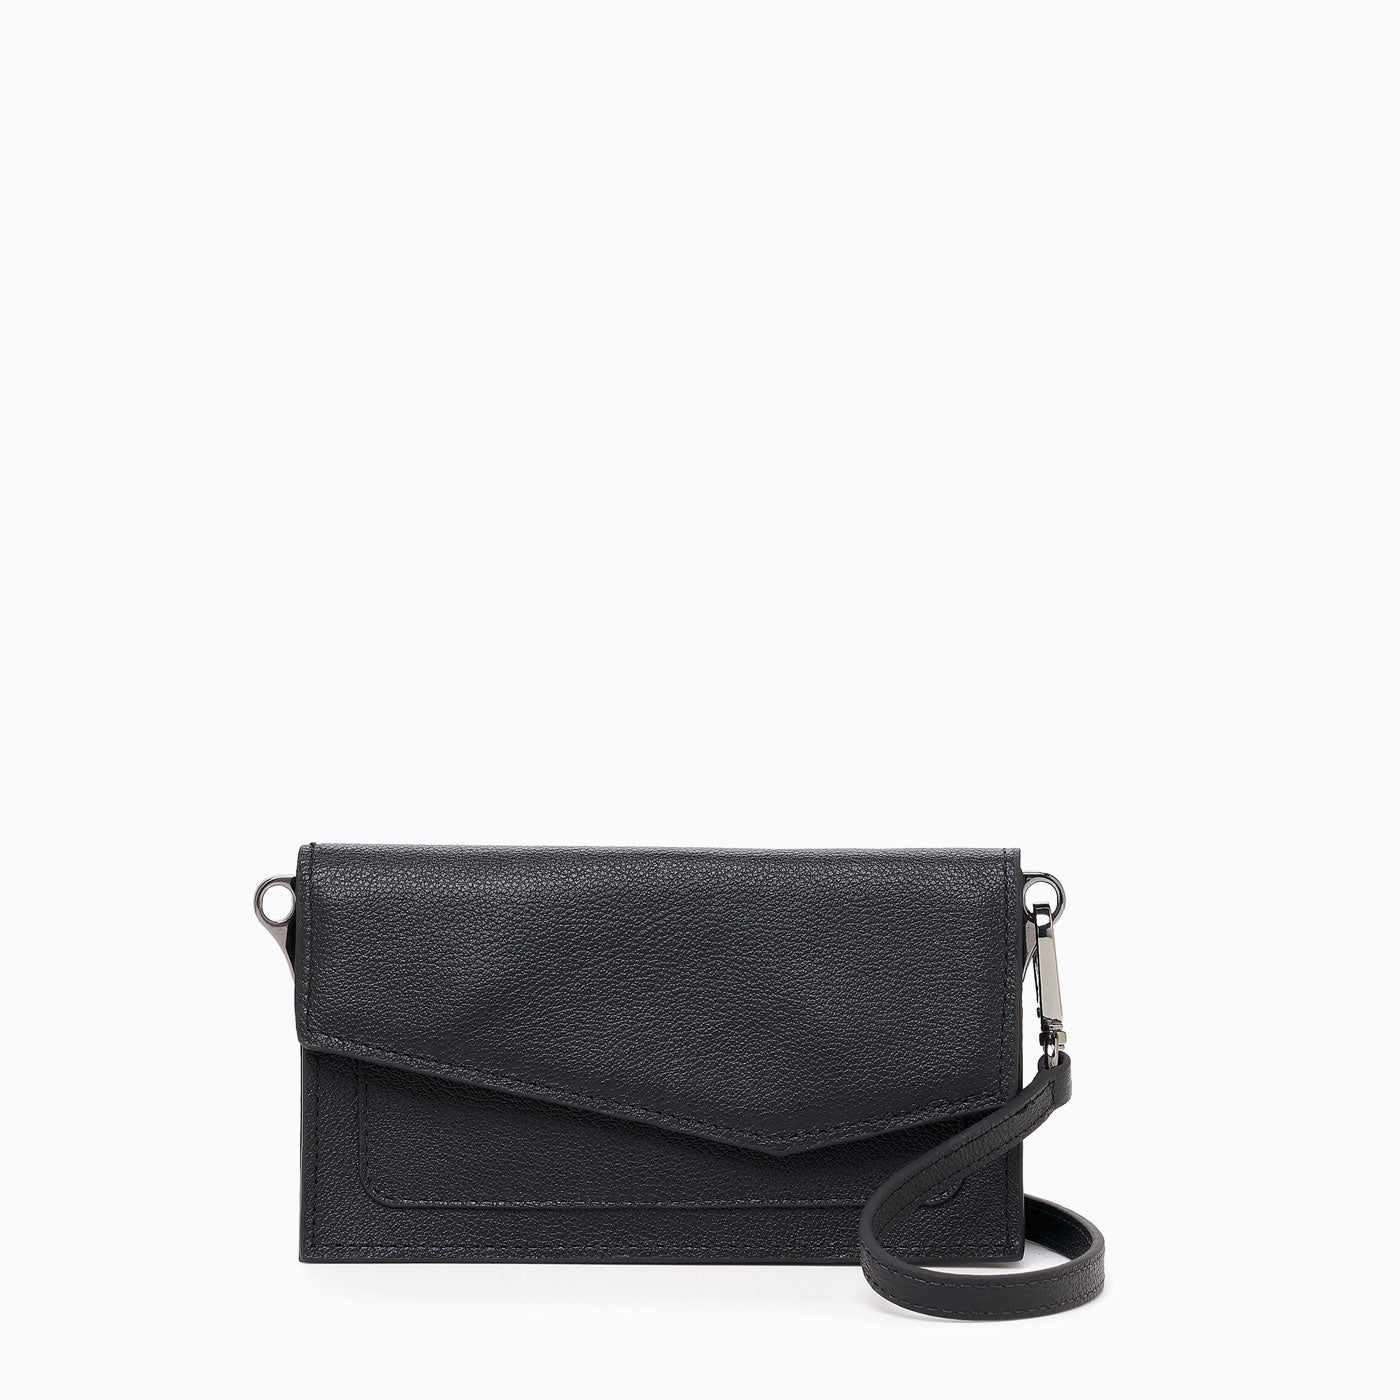 Women's Shoulder Bag/Casual Bag/ Small Handbag/Crossbody Bag/ Black Bag/  Leather | eBay